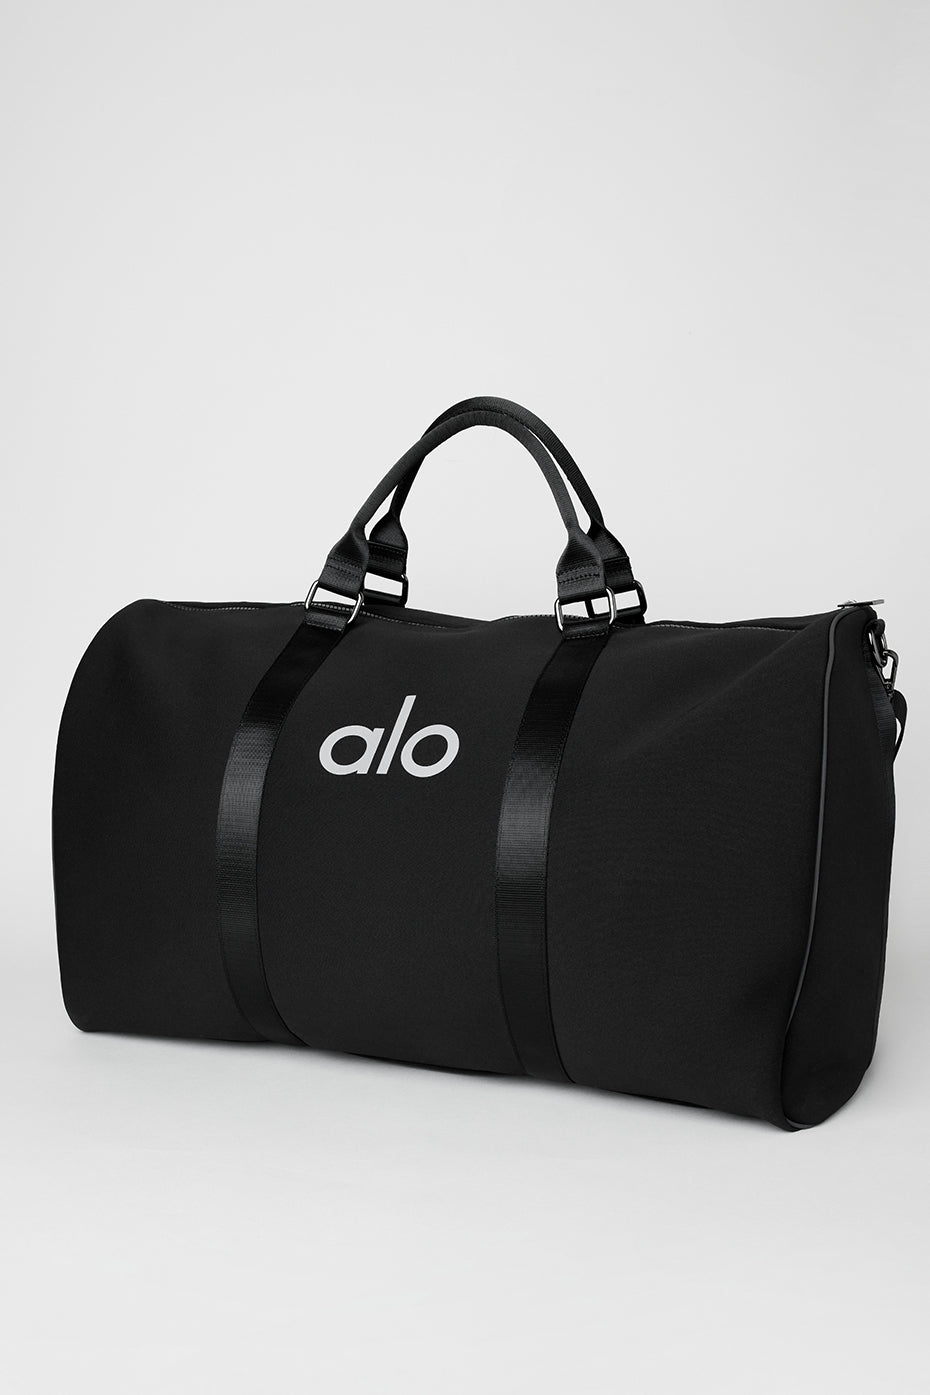 Alo Yoga  Cross Body Bucket Bag in Black - ShopStyle